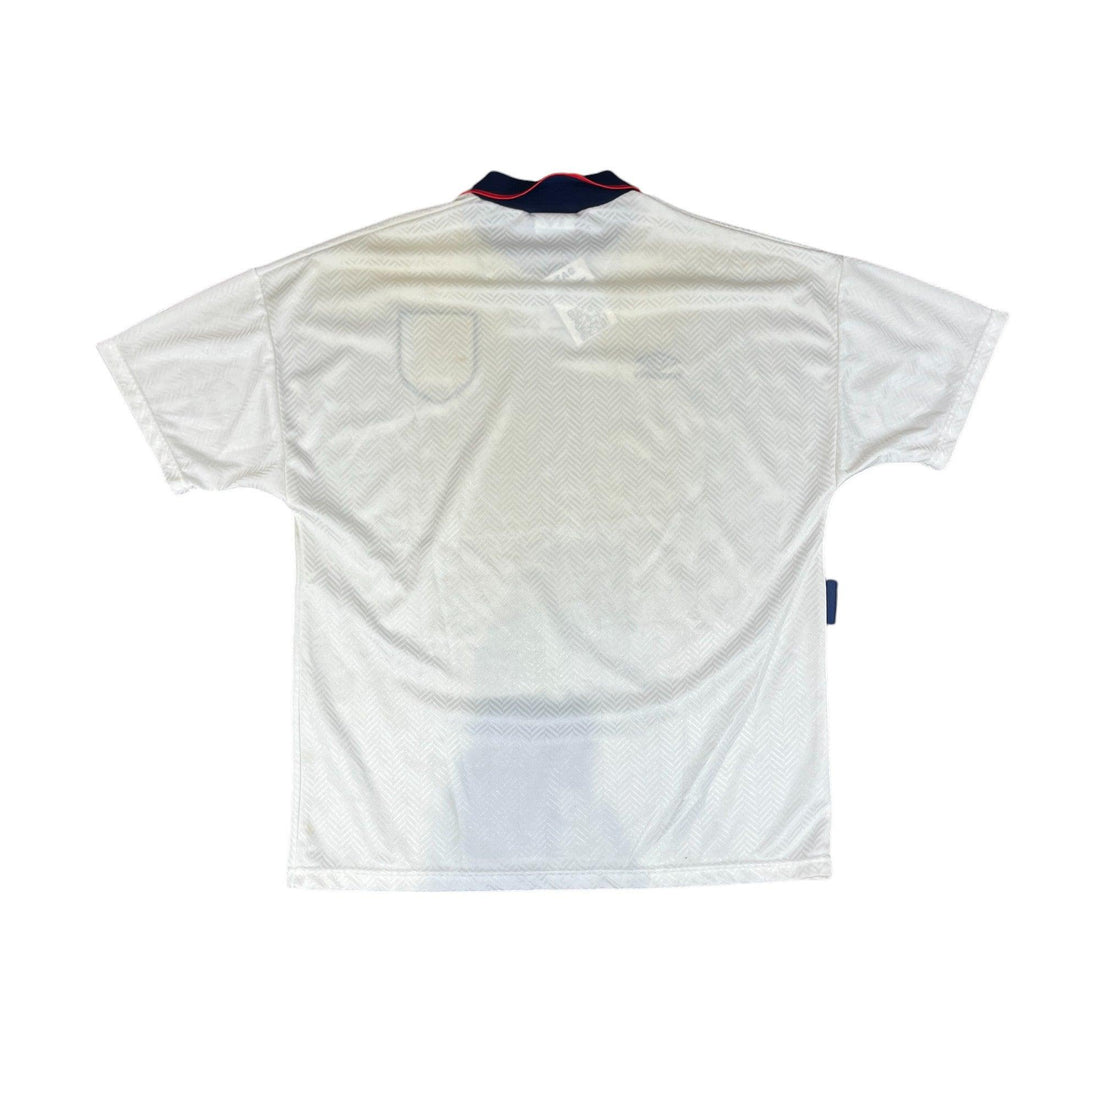 1993-95 White Umbro England Tee - Extra Large - The Streetwear Studio